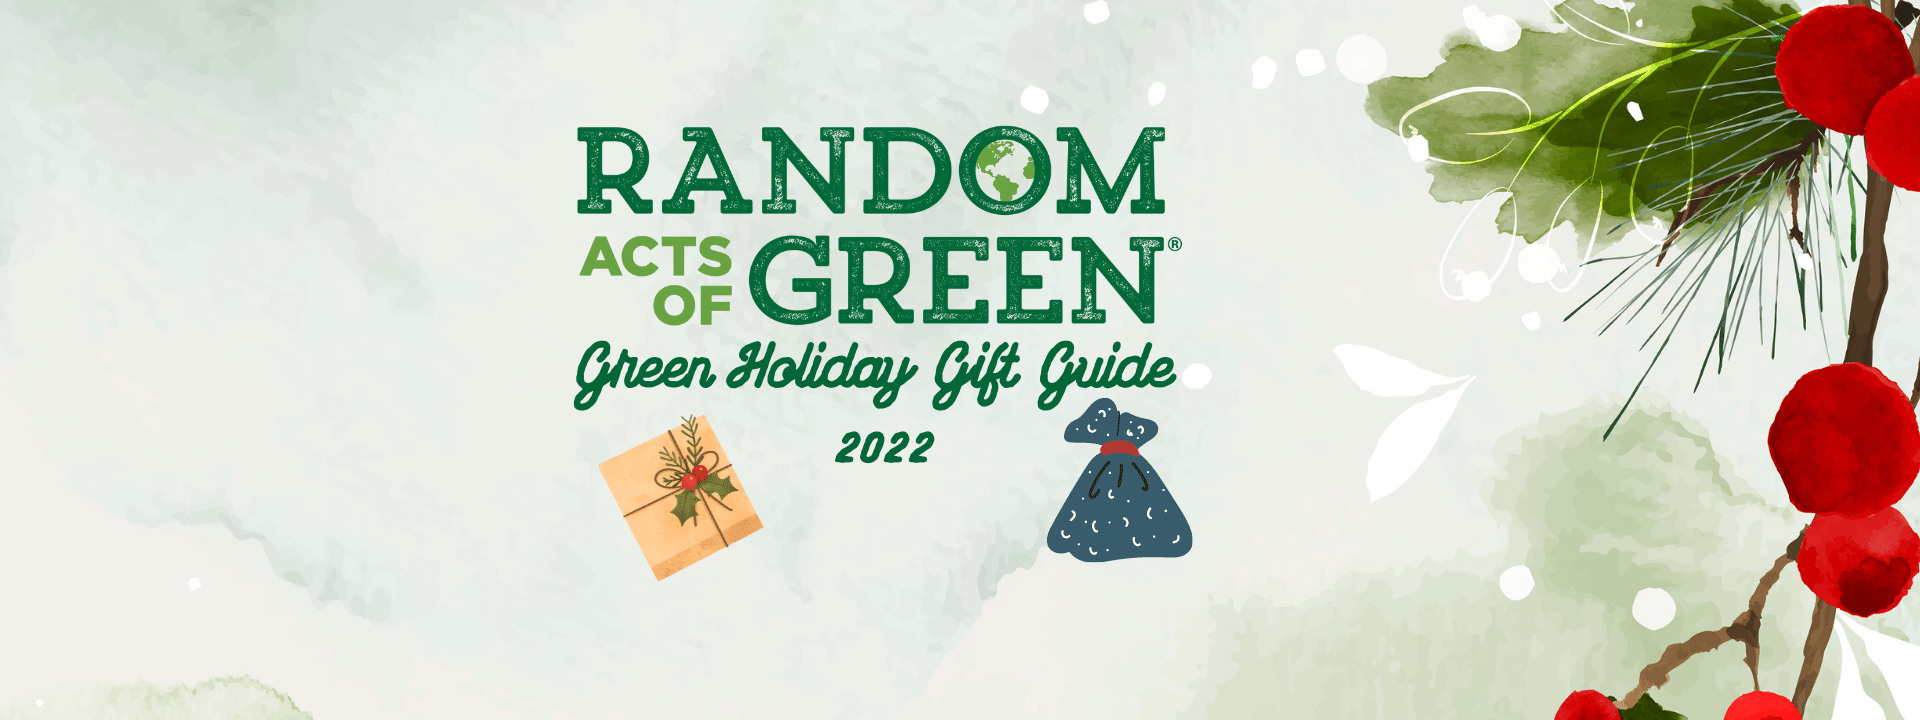 eco-friendly gift ideas